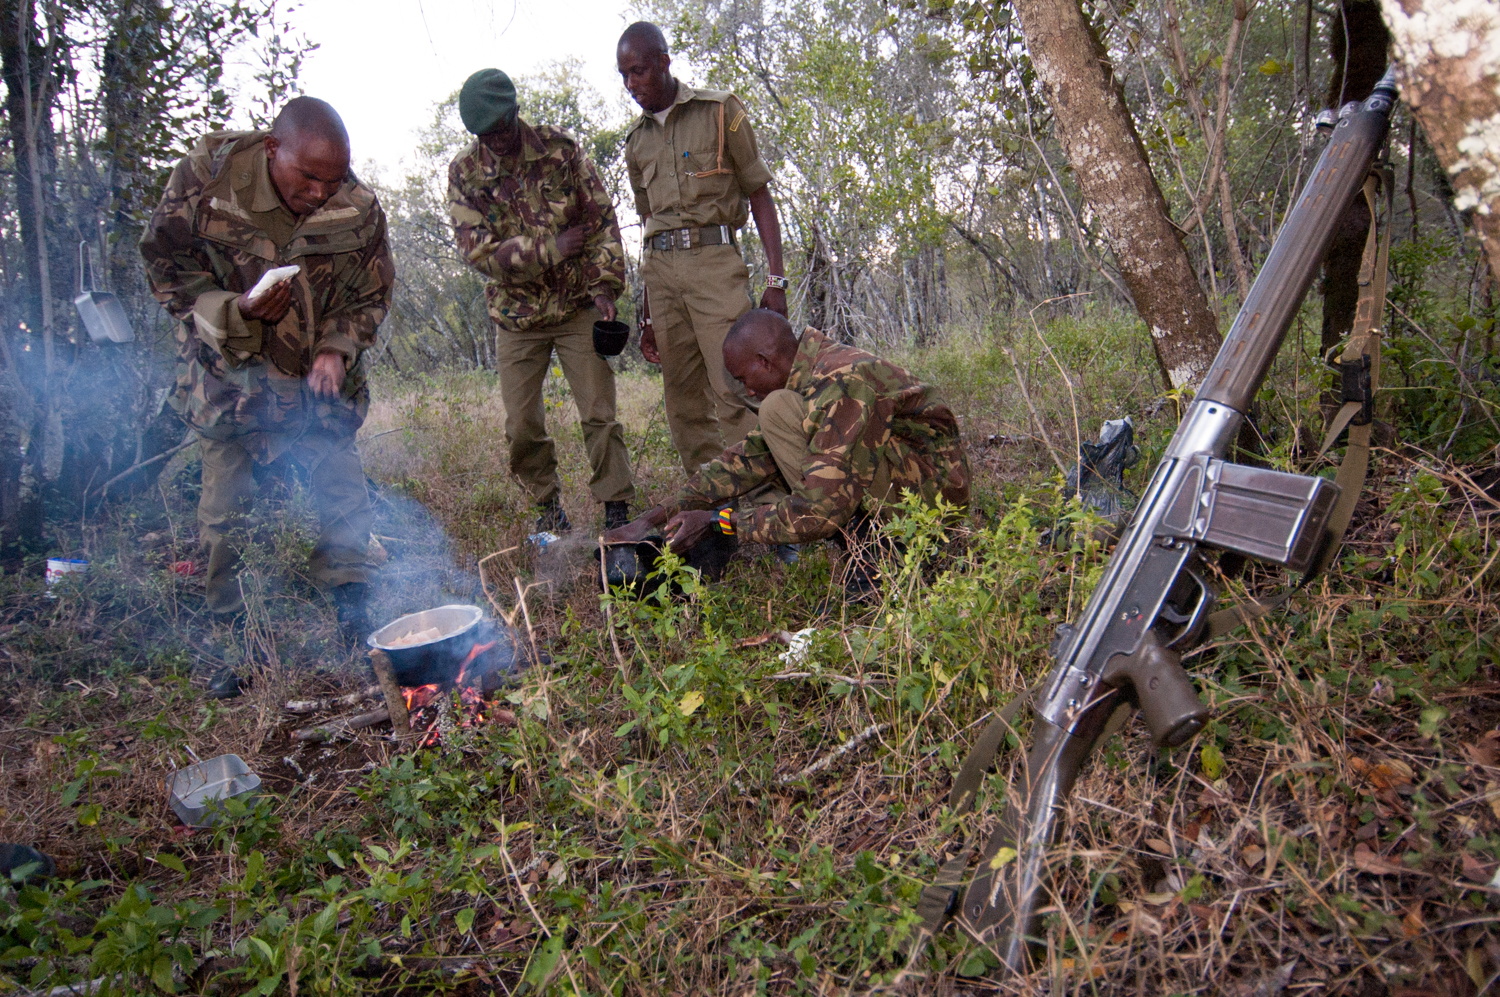  Members of an anti-poaching unit prepare dinner at their camp before patrolling a wildlife park in Lewa Downs, Kenya. 